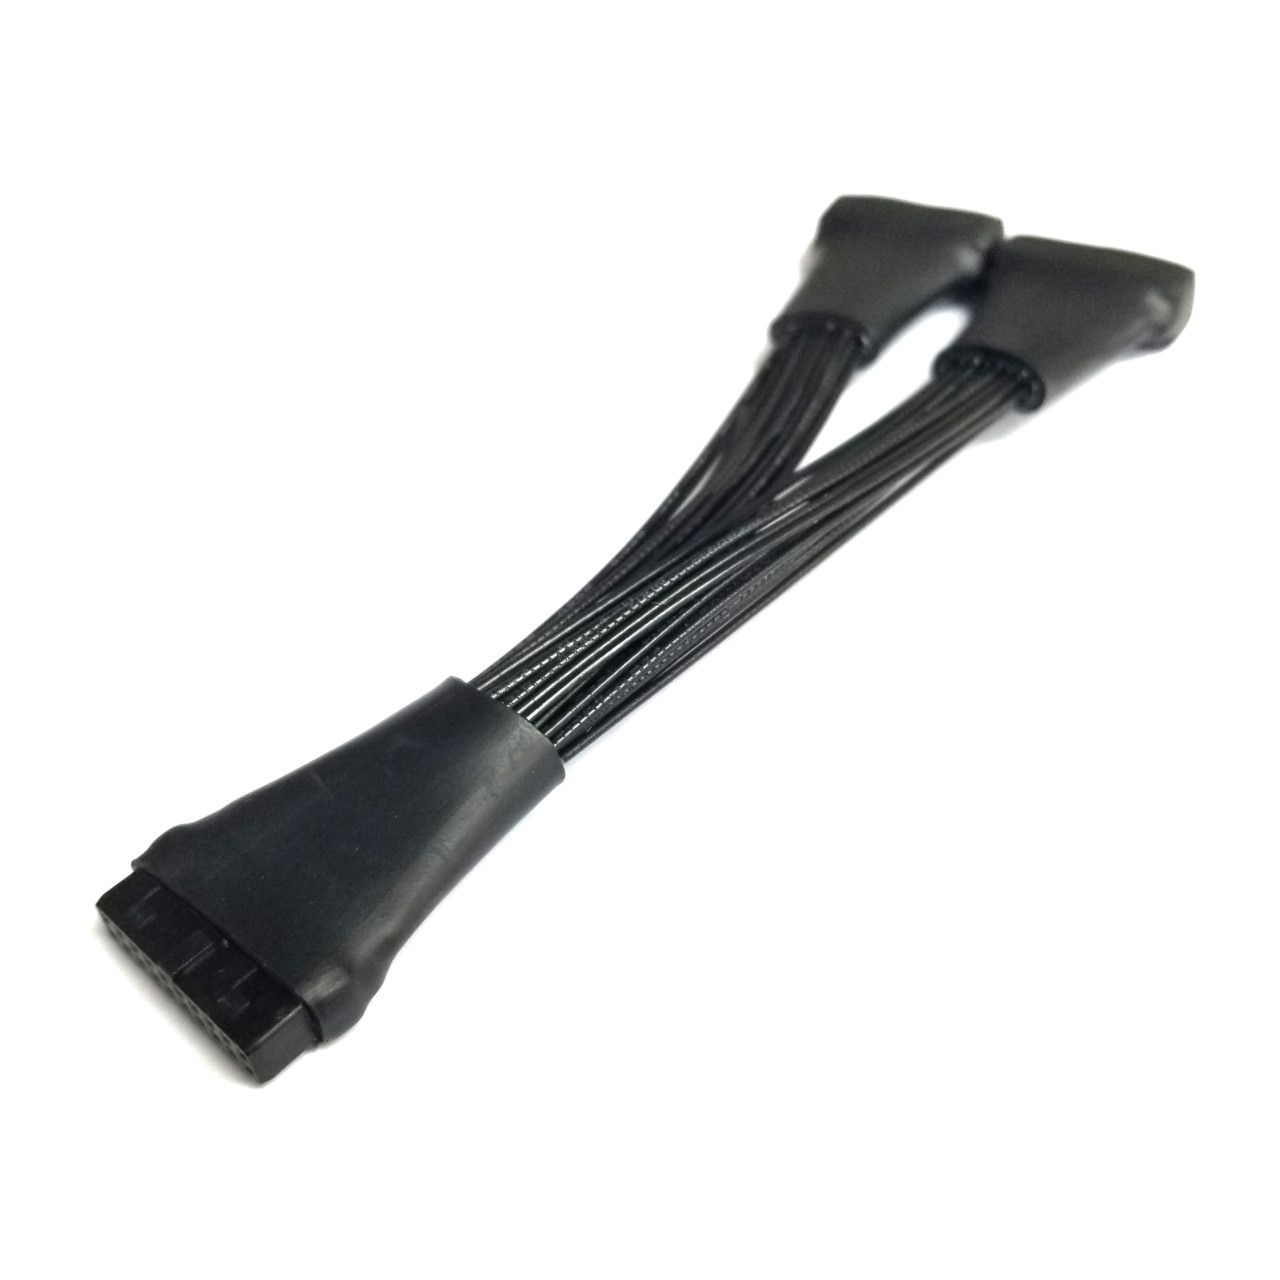 20 USB 3.0 Internal Header Y Splitter Cable 12cm -